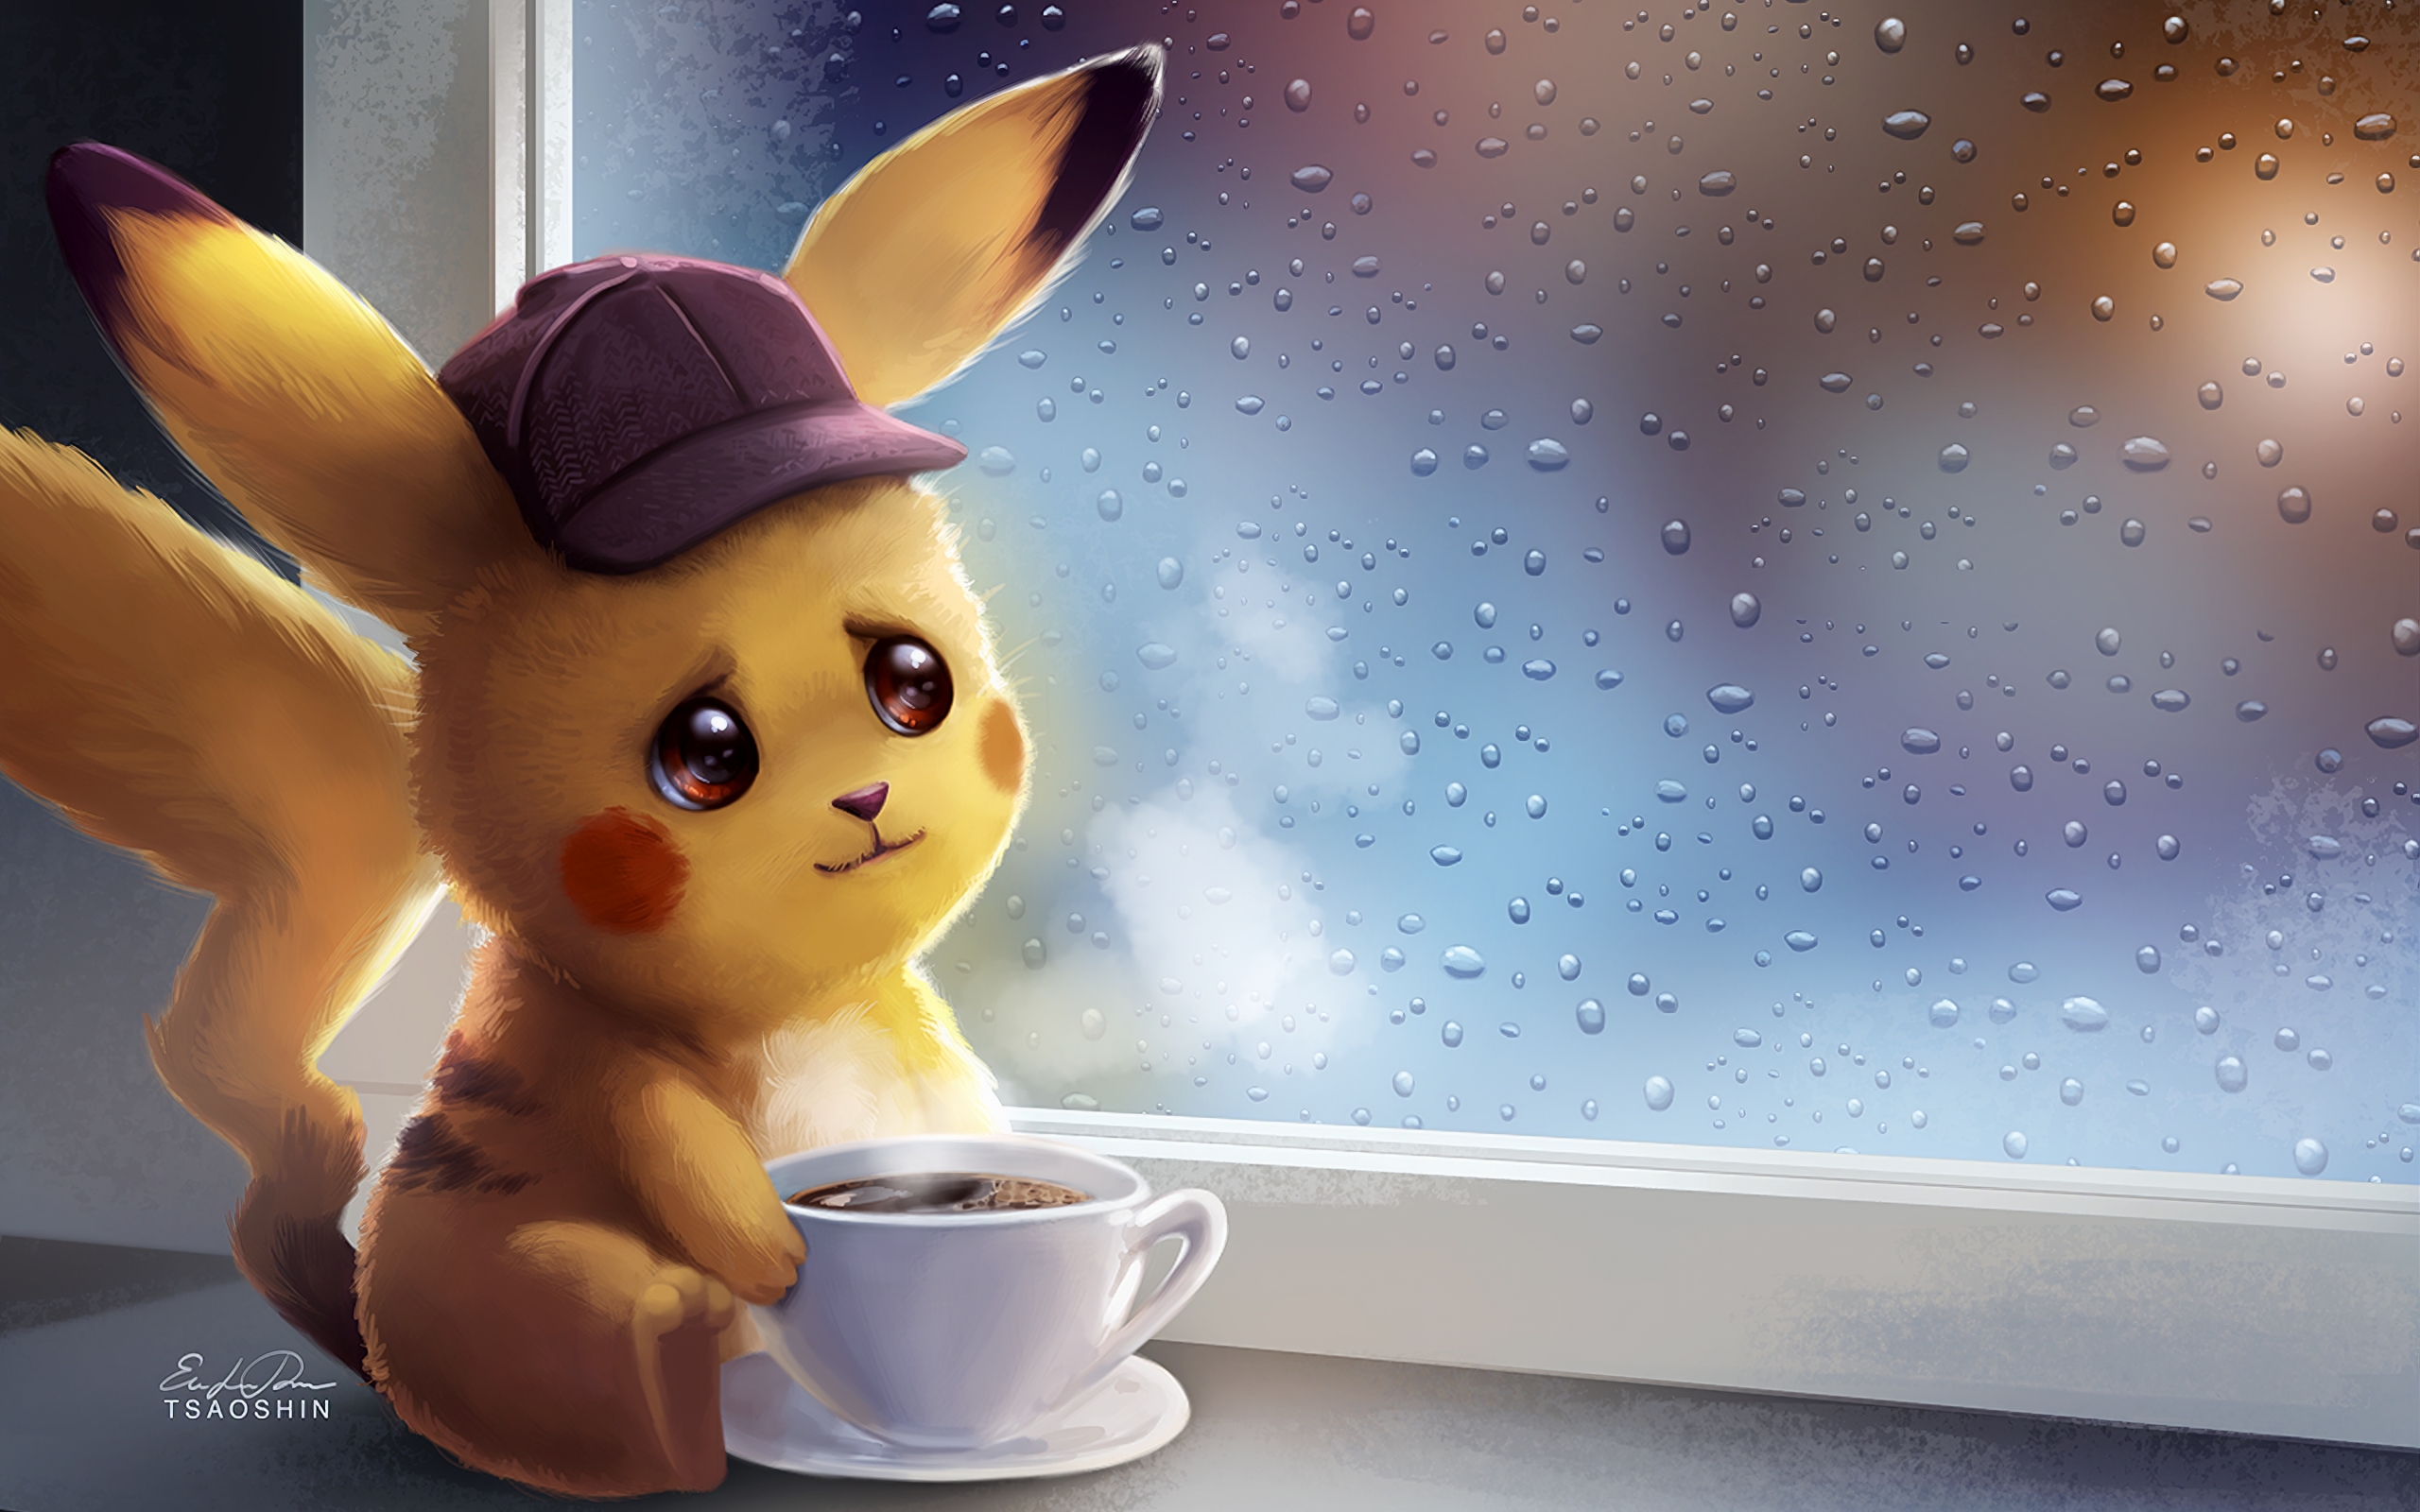 Wallpaper Of Coffee, Cup, Pikachu, Pokémon, Rain Background - Pikachu Wallpaper Hd For Mobile , HD Wallpaper & Backgrounds